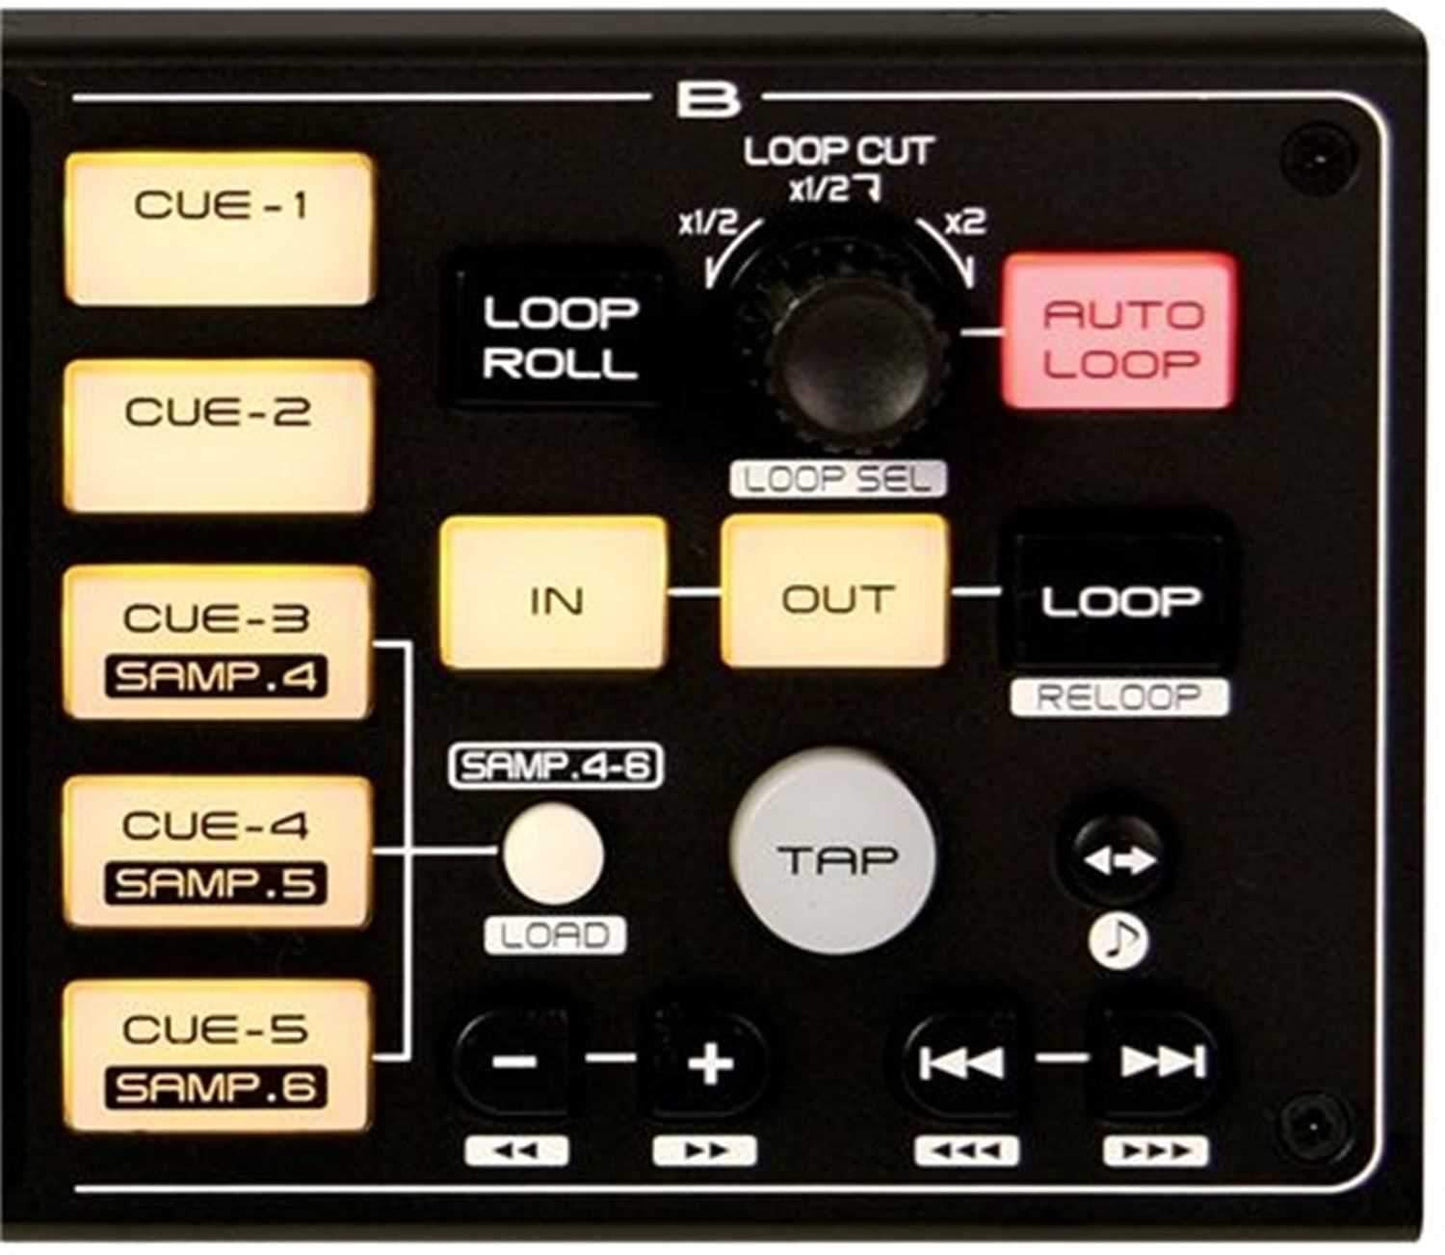 Denon DJ DN-HC1000S Serato USB MIDI Controller - ProSound and Stage Lighting